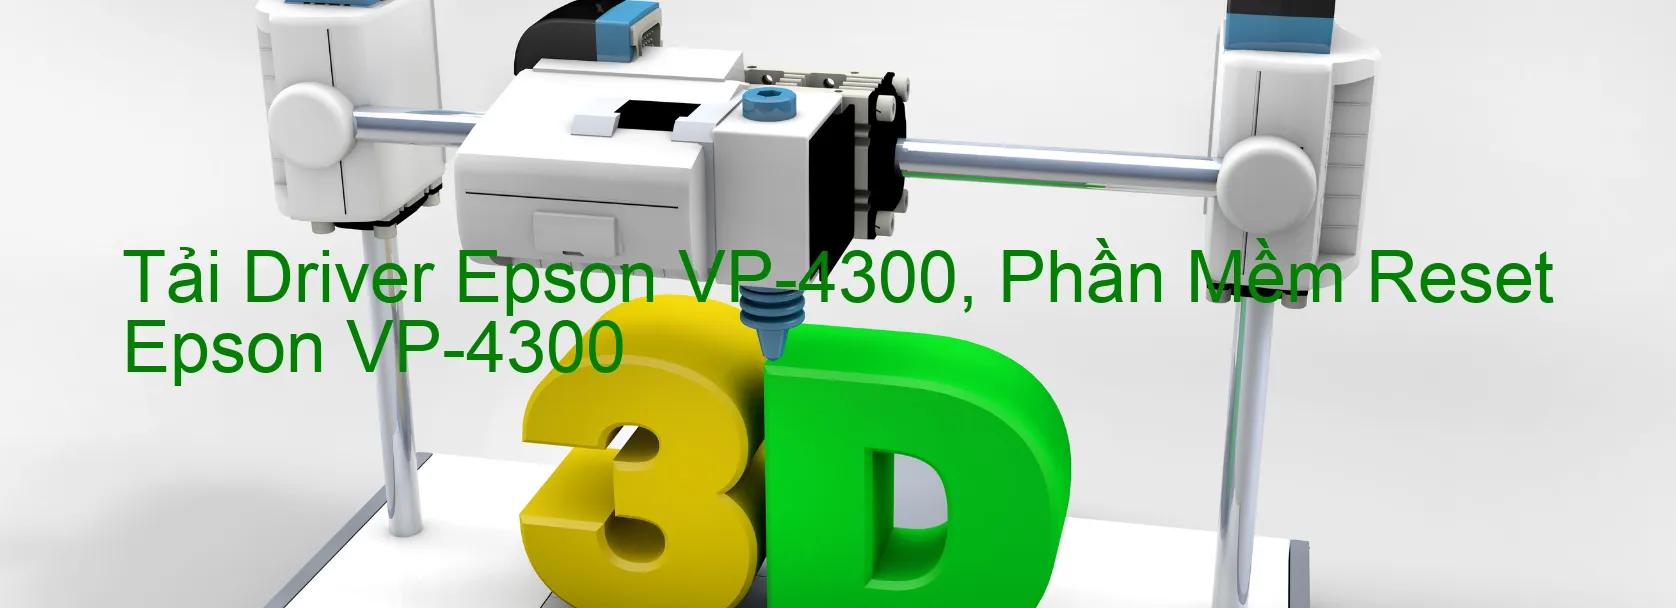 Driver Epson VP-4300, Phần Mềm Reset Epson VP-4300